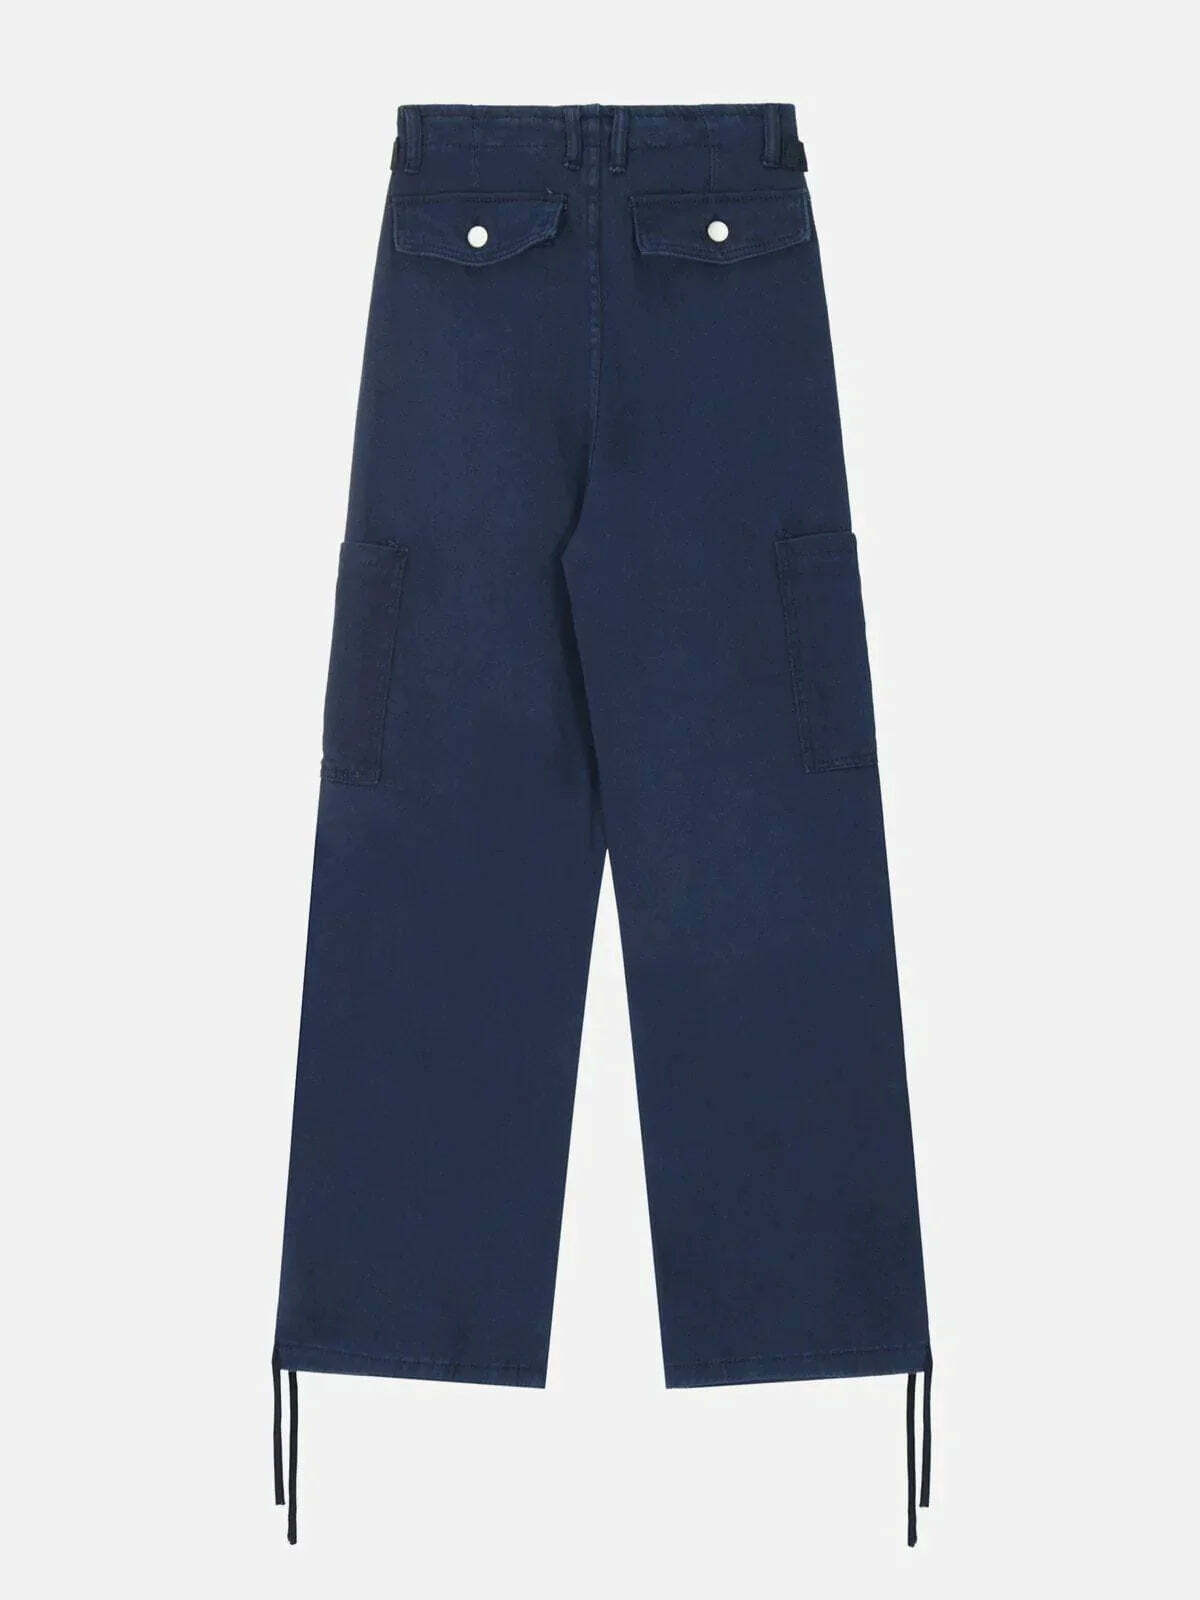 retro wideleg cargo pants edgy & functional streetwear 2483